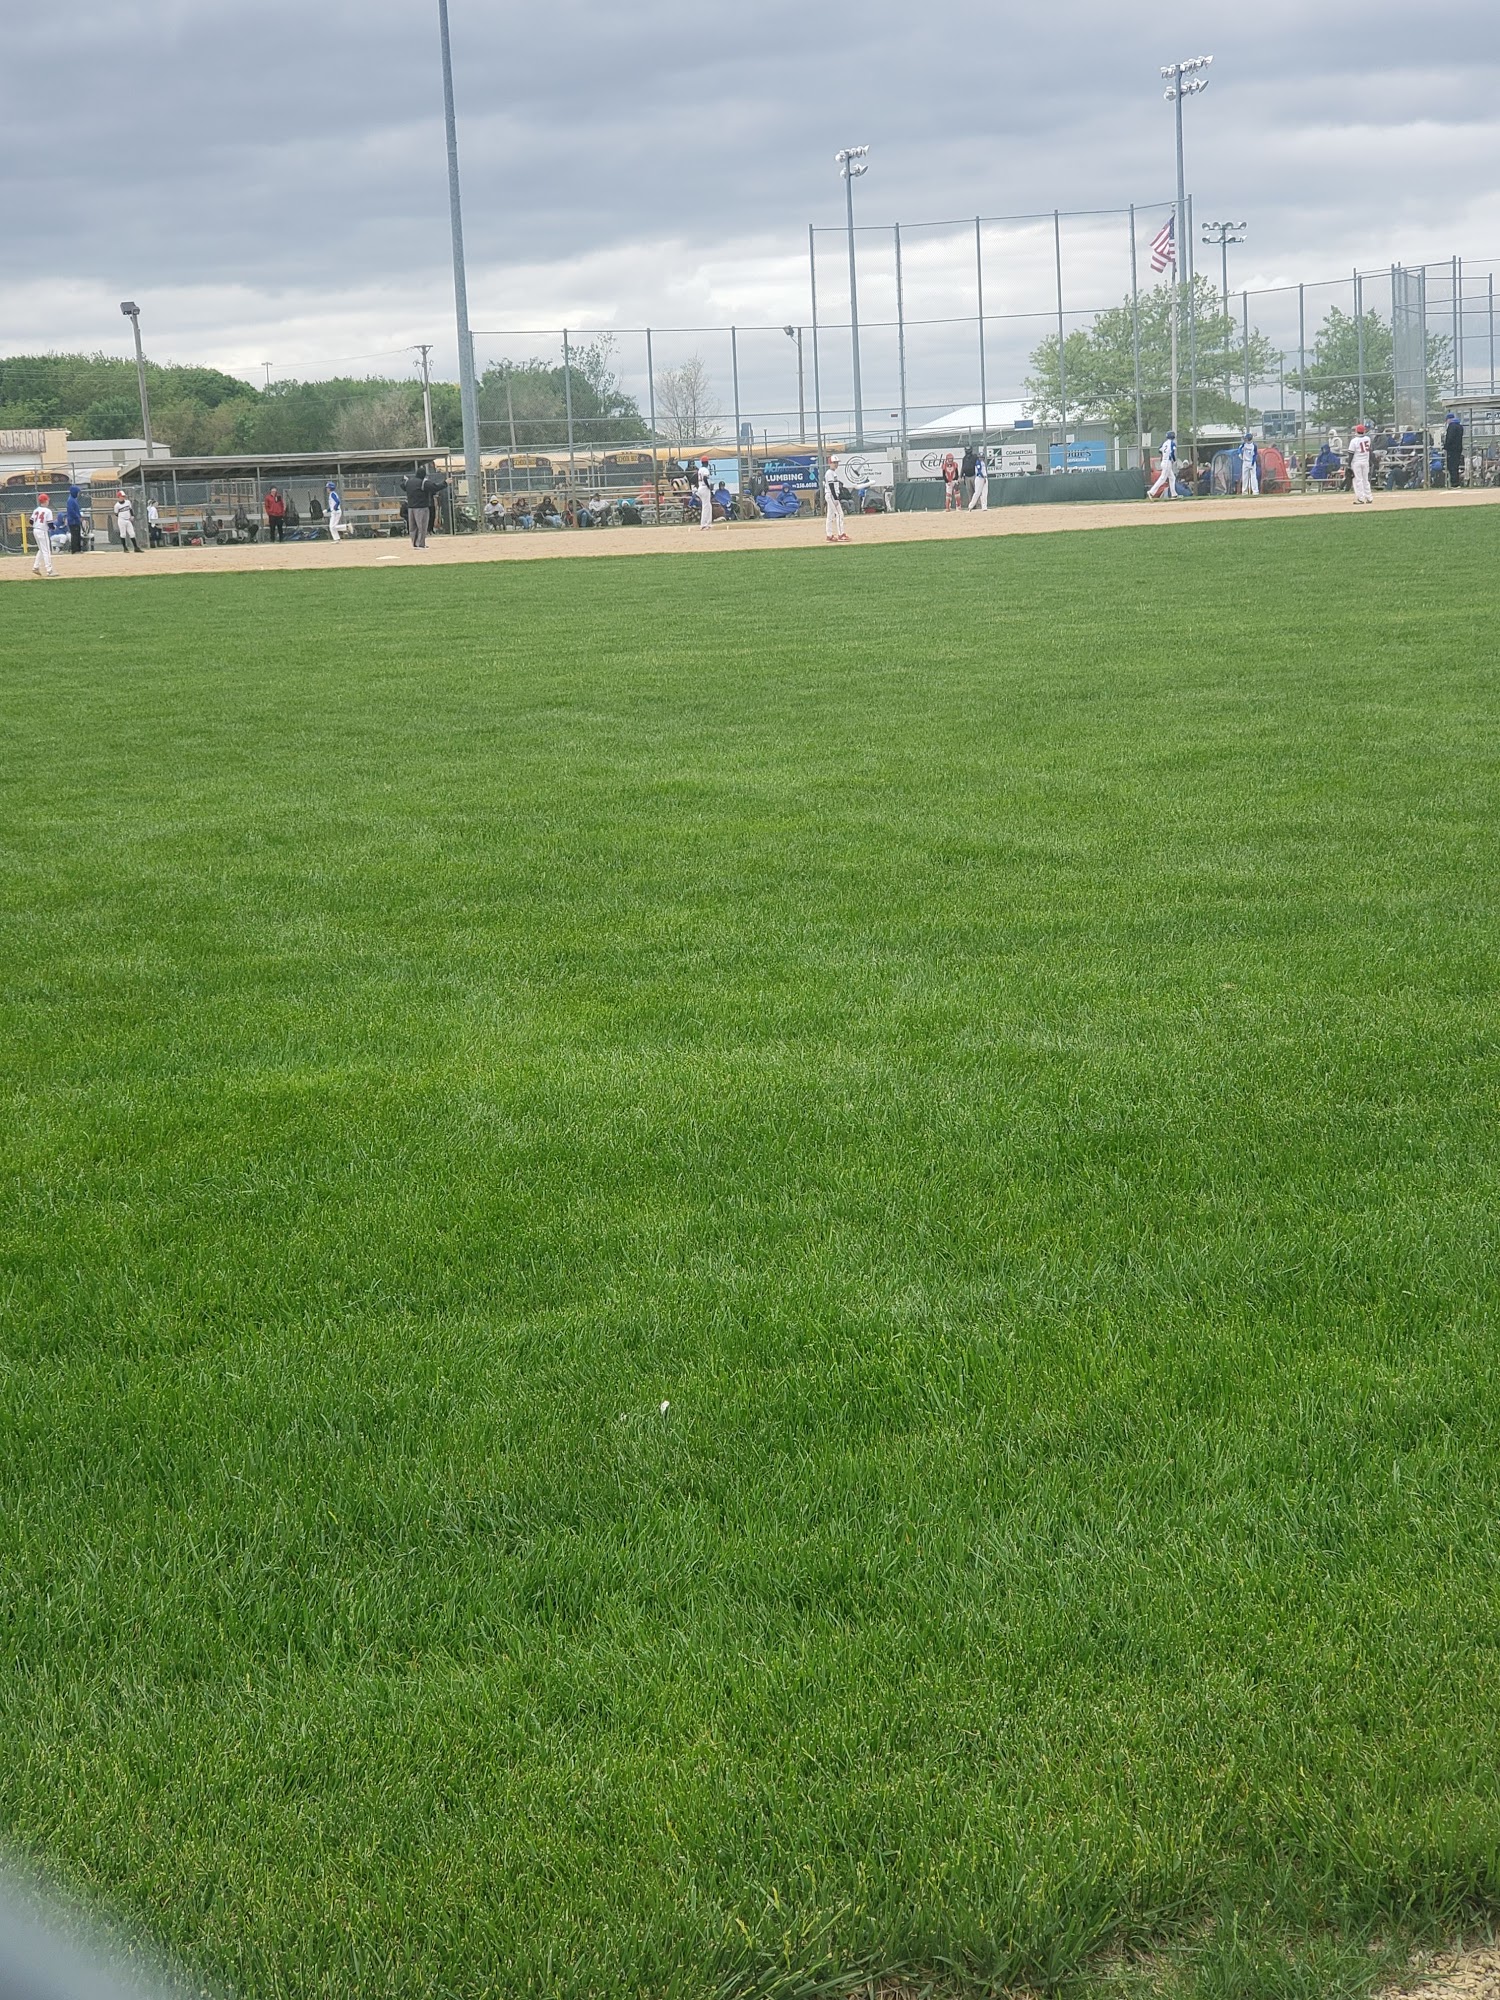 River City Baseball and Softball Association